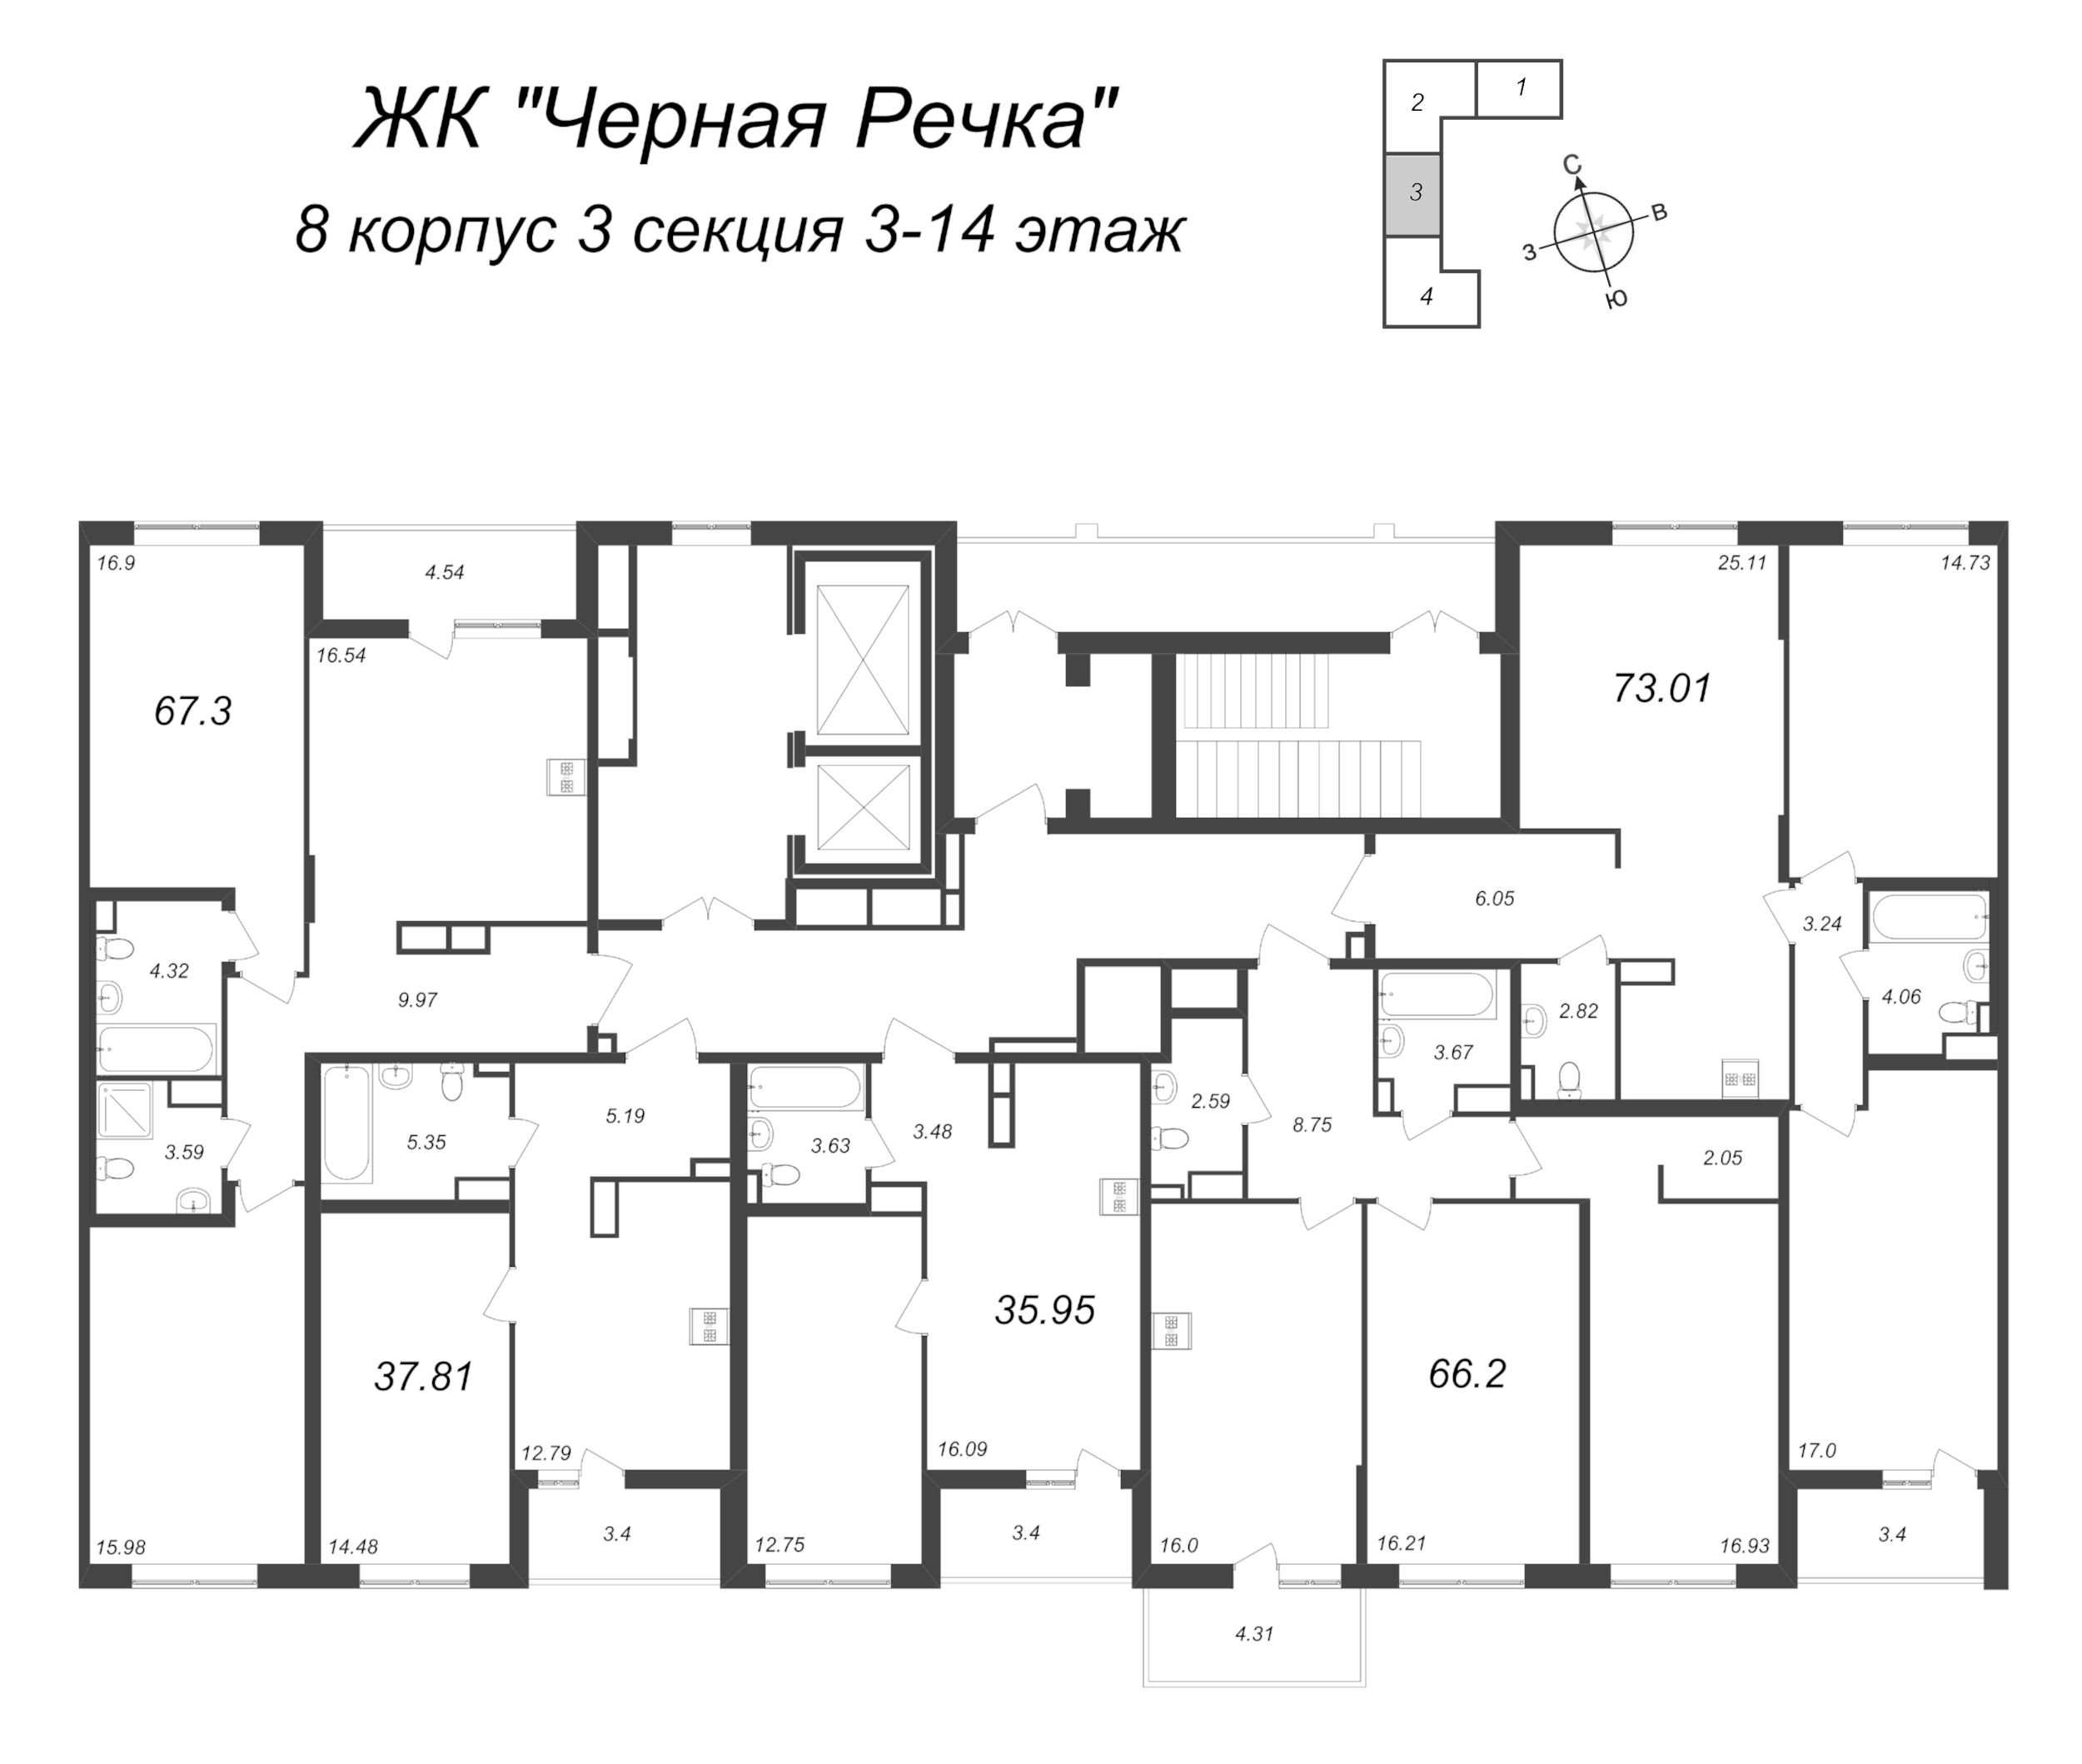 2-комнатная (Евро) квартира, 35.95 м² - планировка этажа